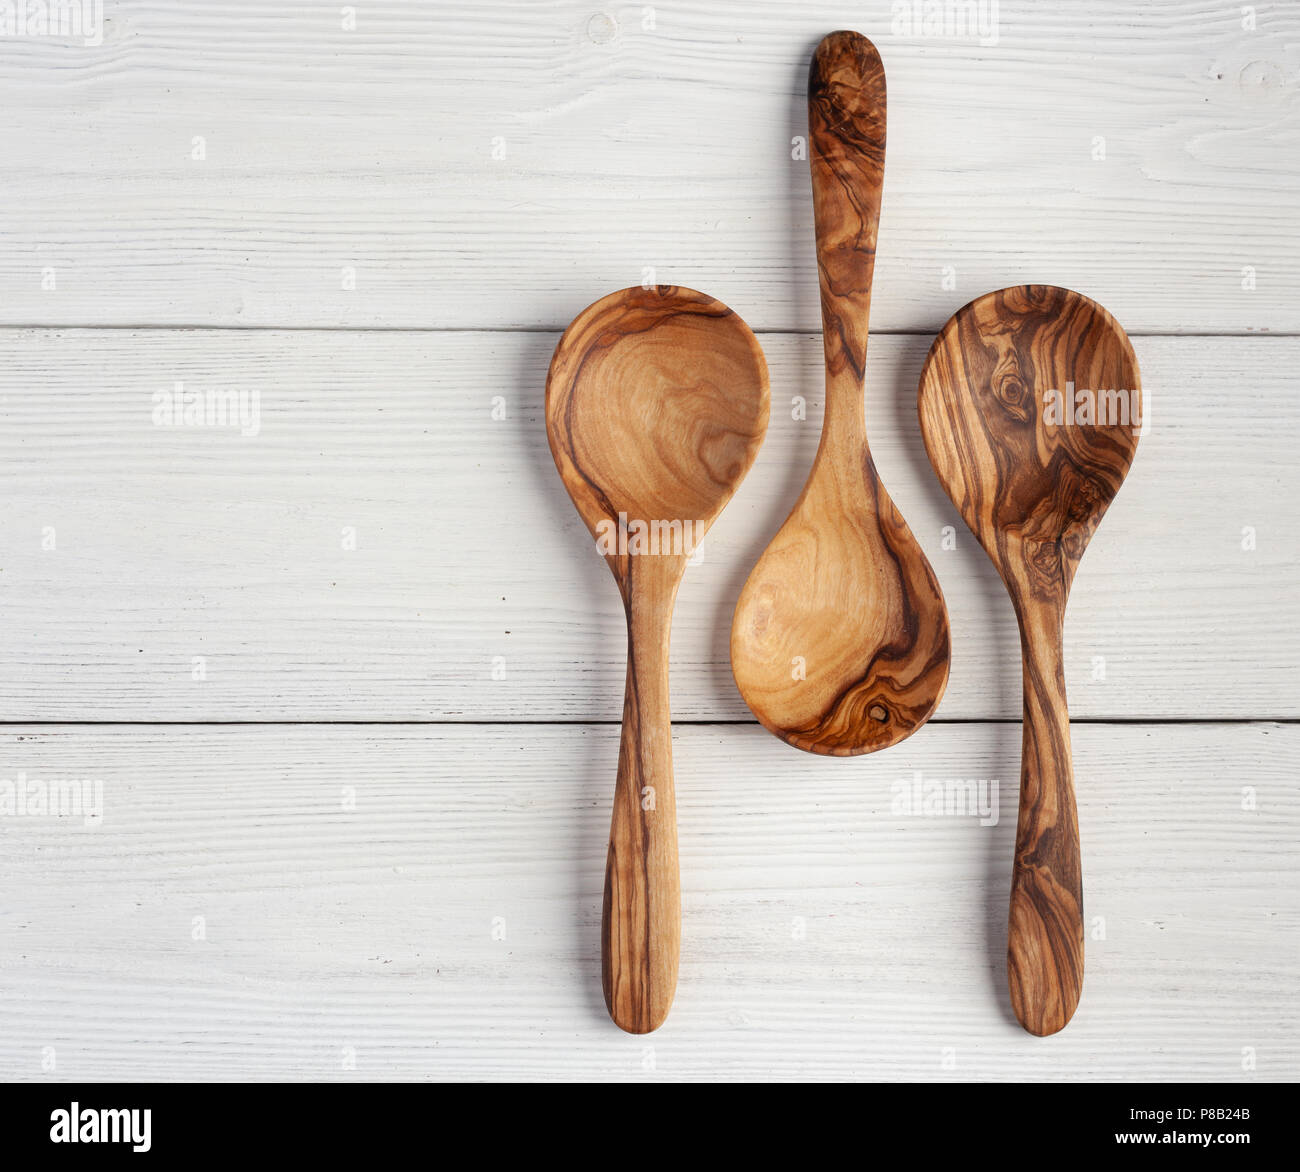 Three kitchen utensils against a white background - fish slice, potato  masher and wooden spoon Stock Photo - Alamy